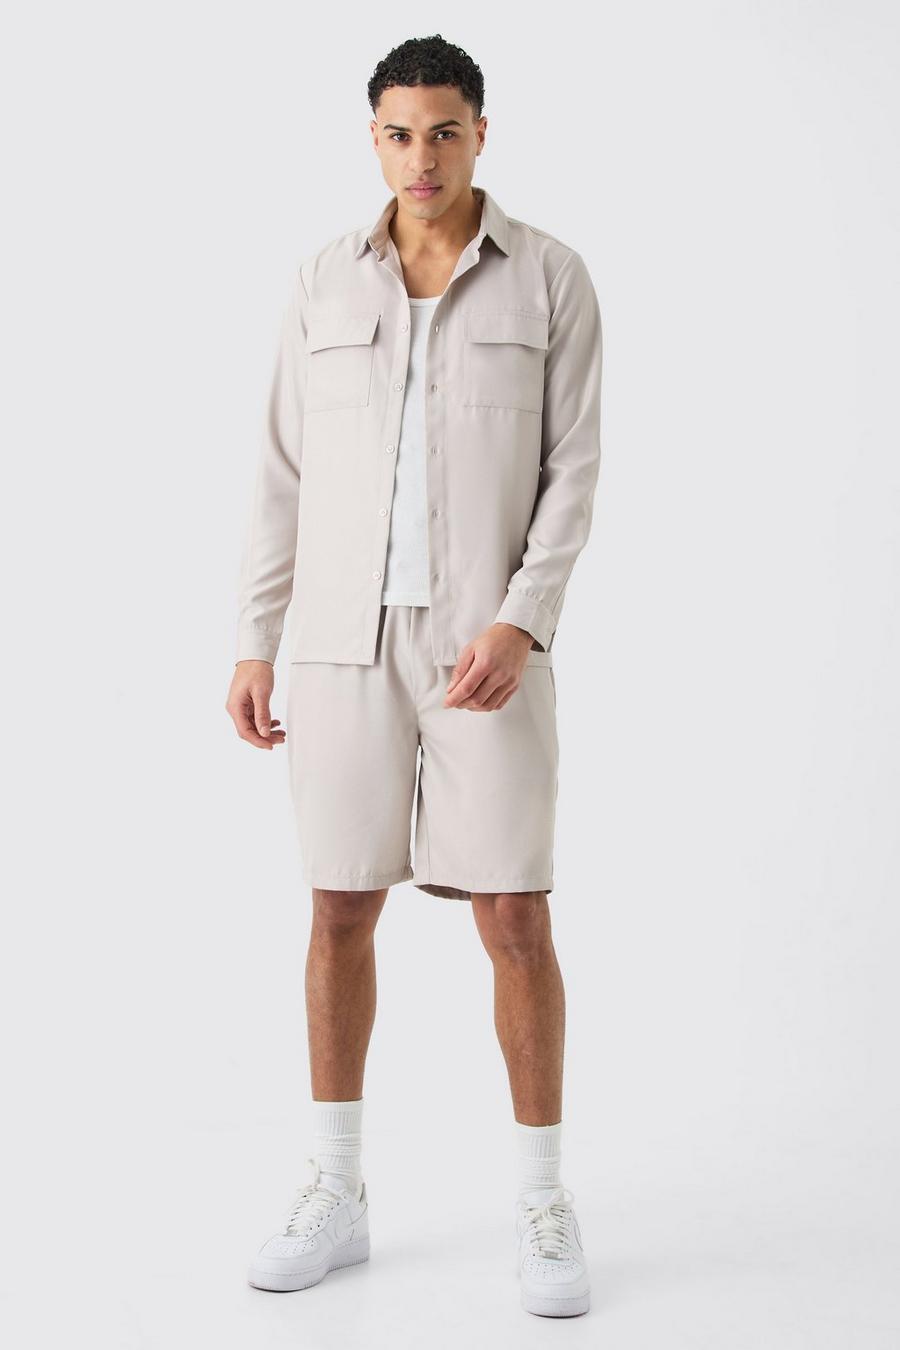 Weiches Twill Overshirt und Shorts, Pale grey image number 1